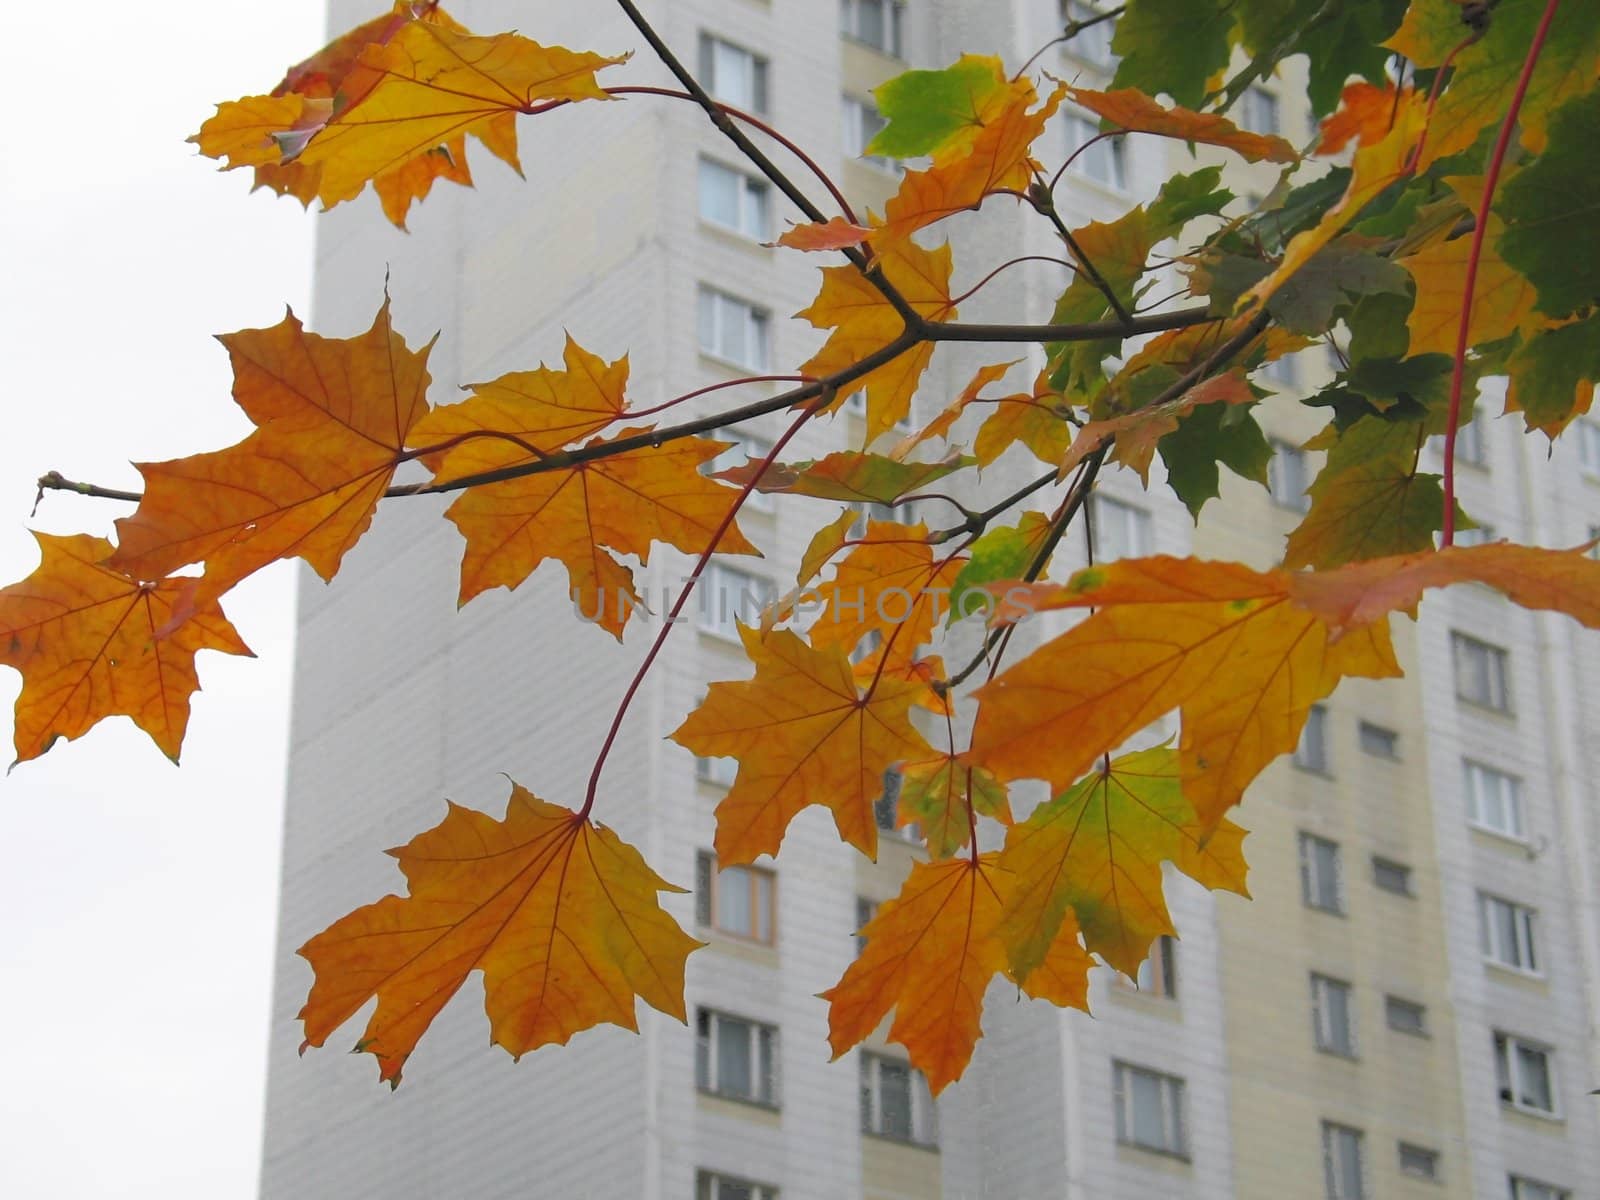 Autumn in a city by Stabivalen